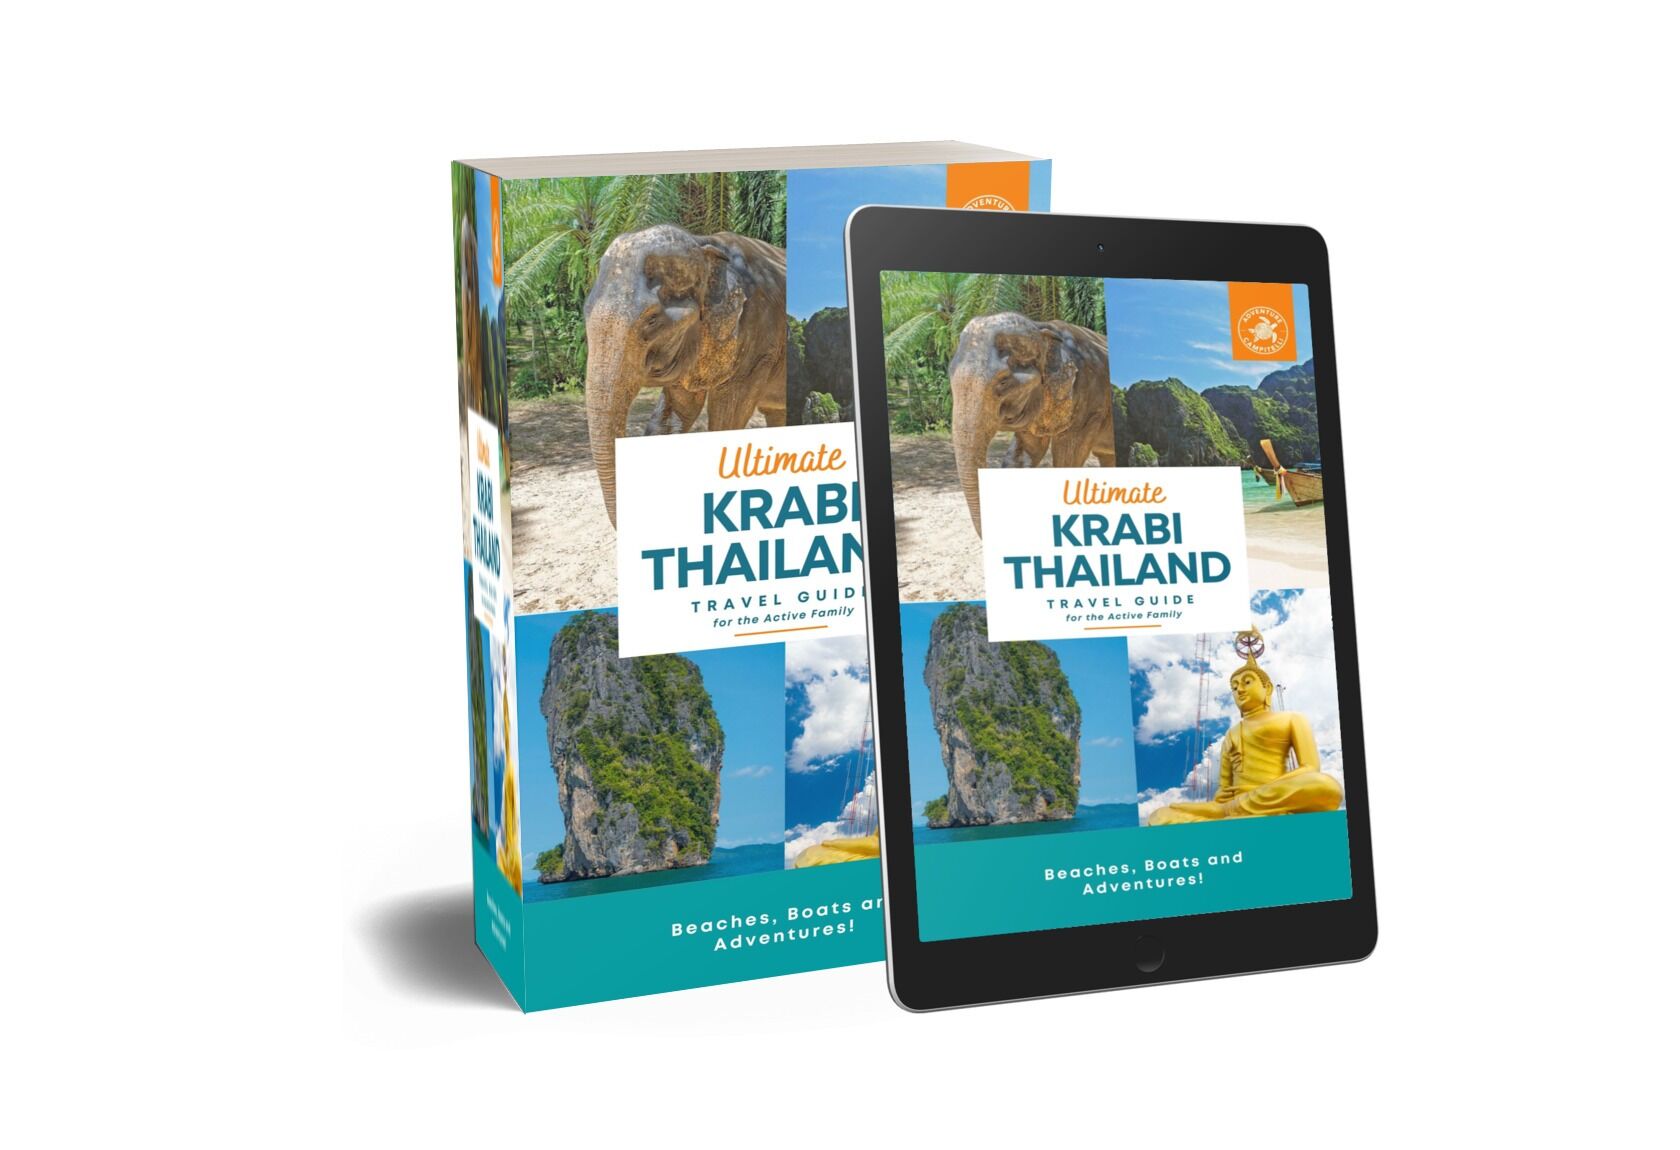 Krabi Thailand Travel Guide